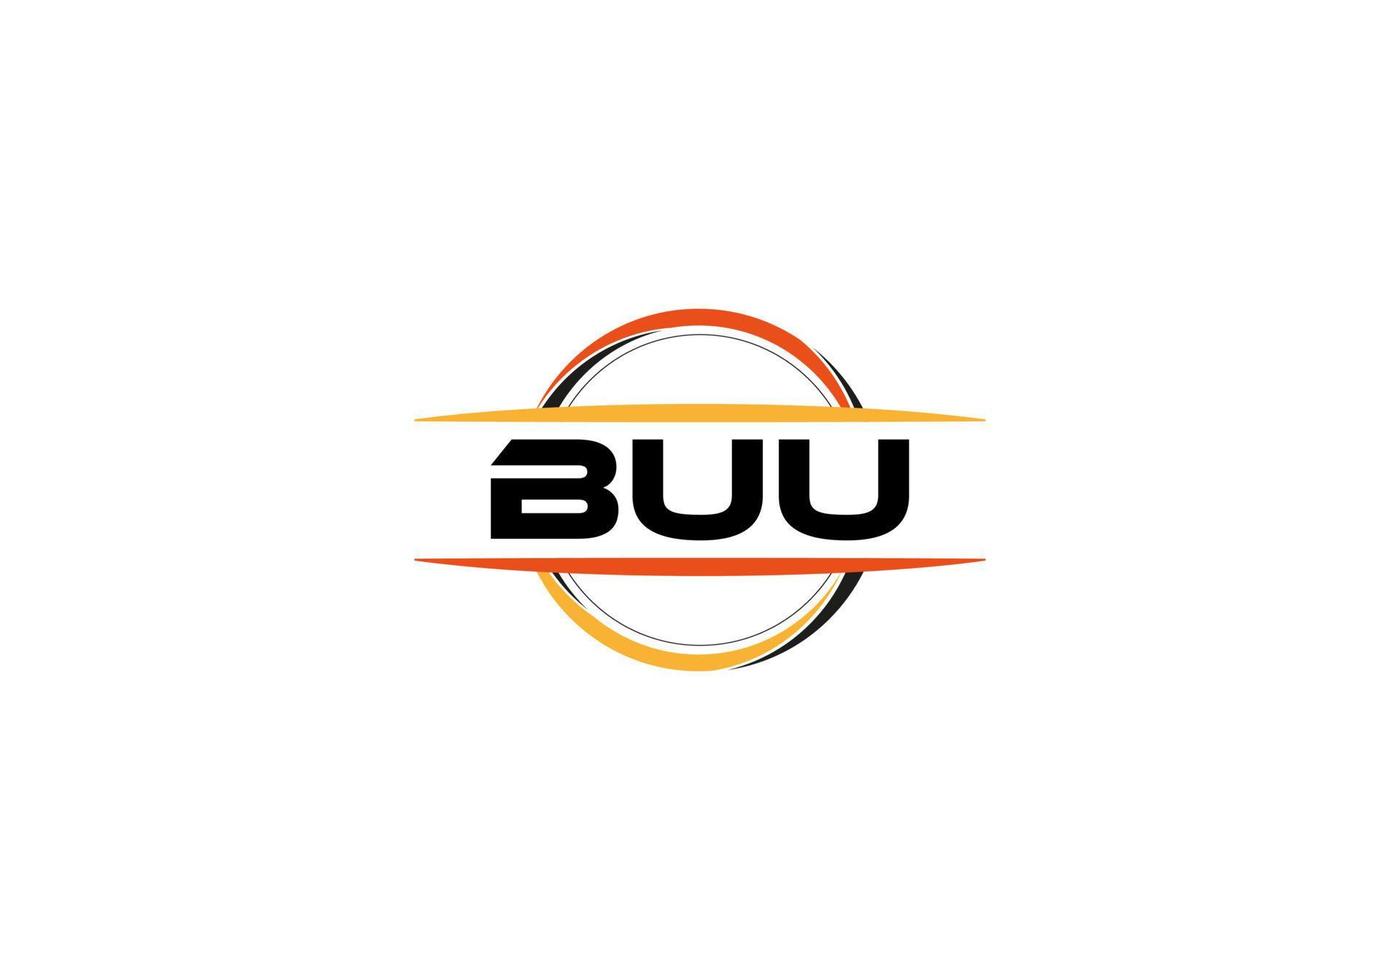 BUU letter royalty mandala shape logo. BUU brush art logo. BUU logo for a company, business, and commercial use. vector